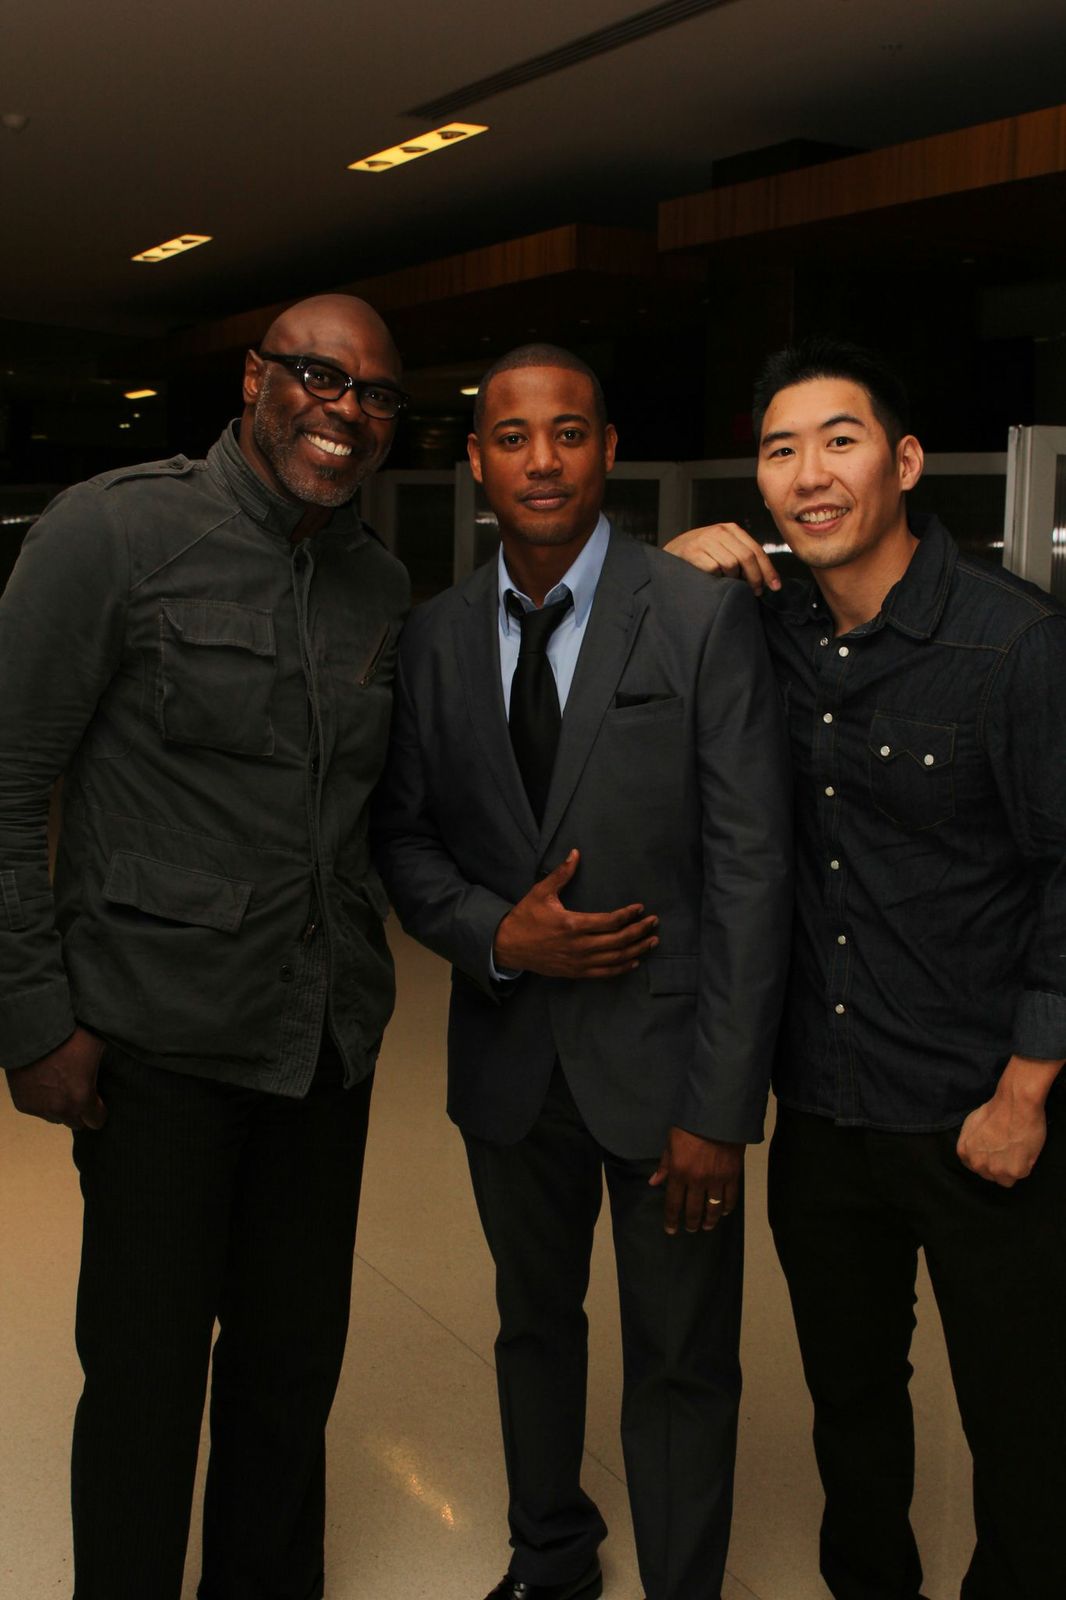 Michael Bentt, Derrex Brady & Peter Jae at the 2013 Los Angeles screening of The Championship Rounds.